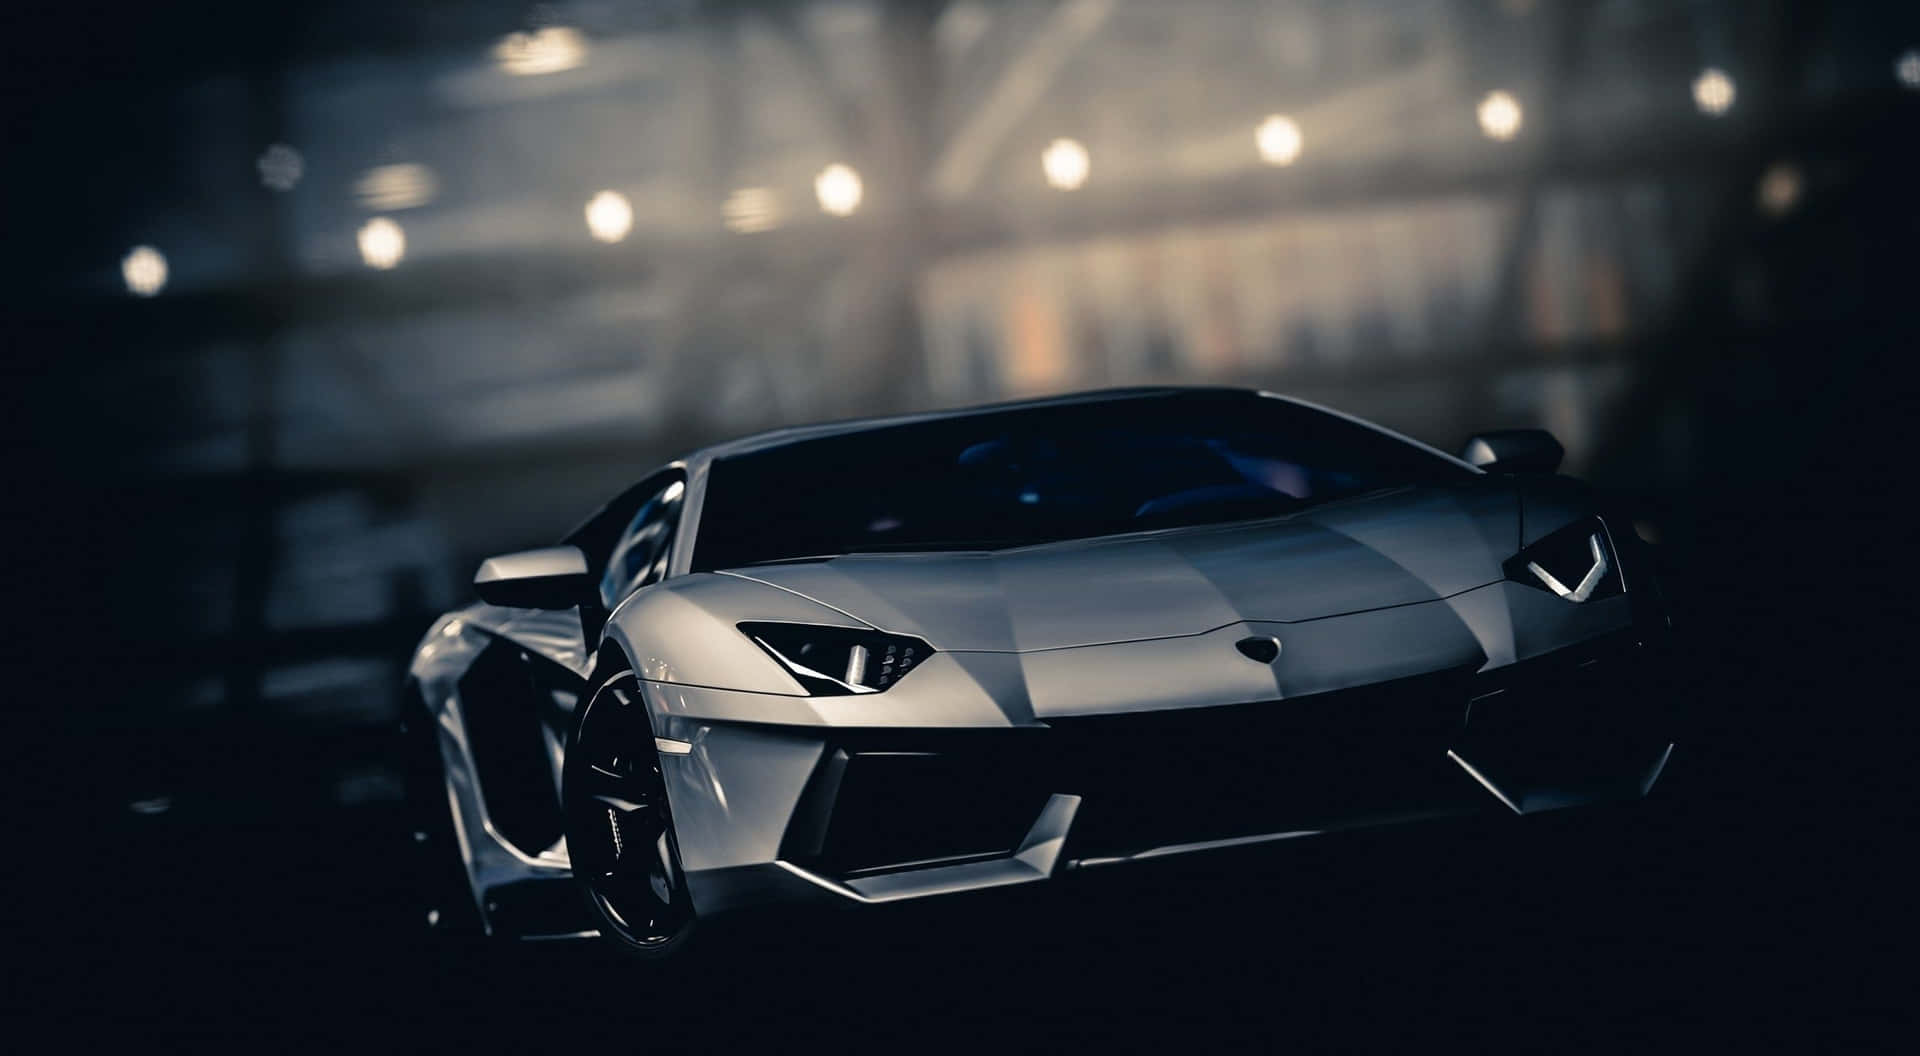 Tag på en tur med det seje Lamborghini Wallpaper